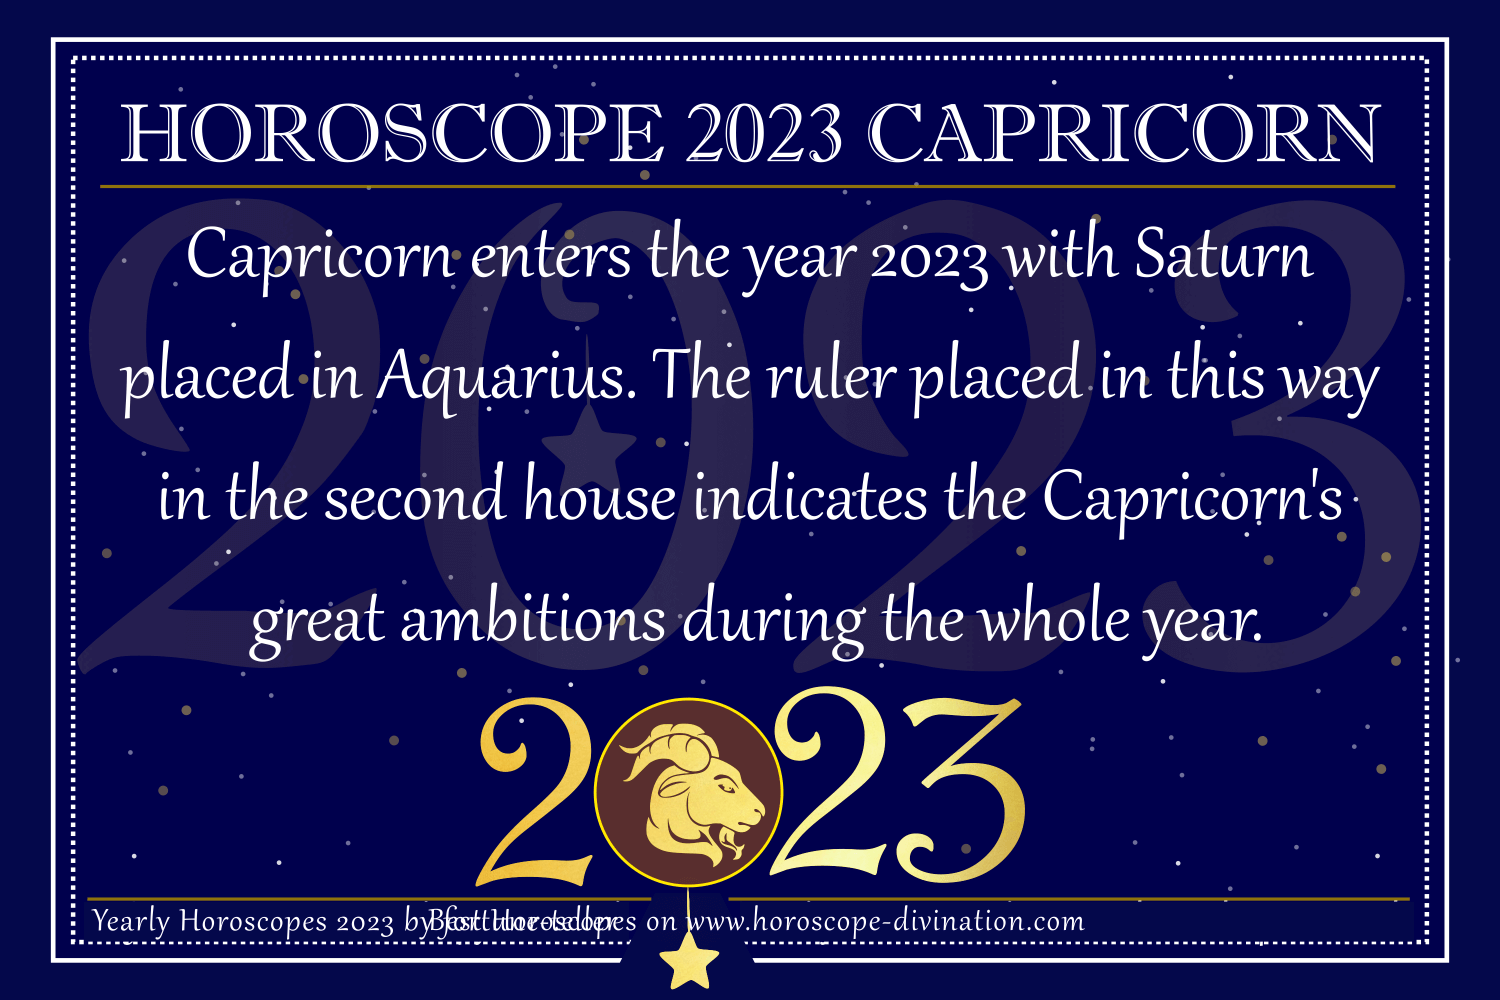 Horoscope 2023 Capricorn - Yearly Forecast & Future